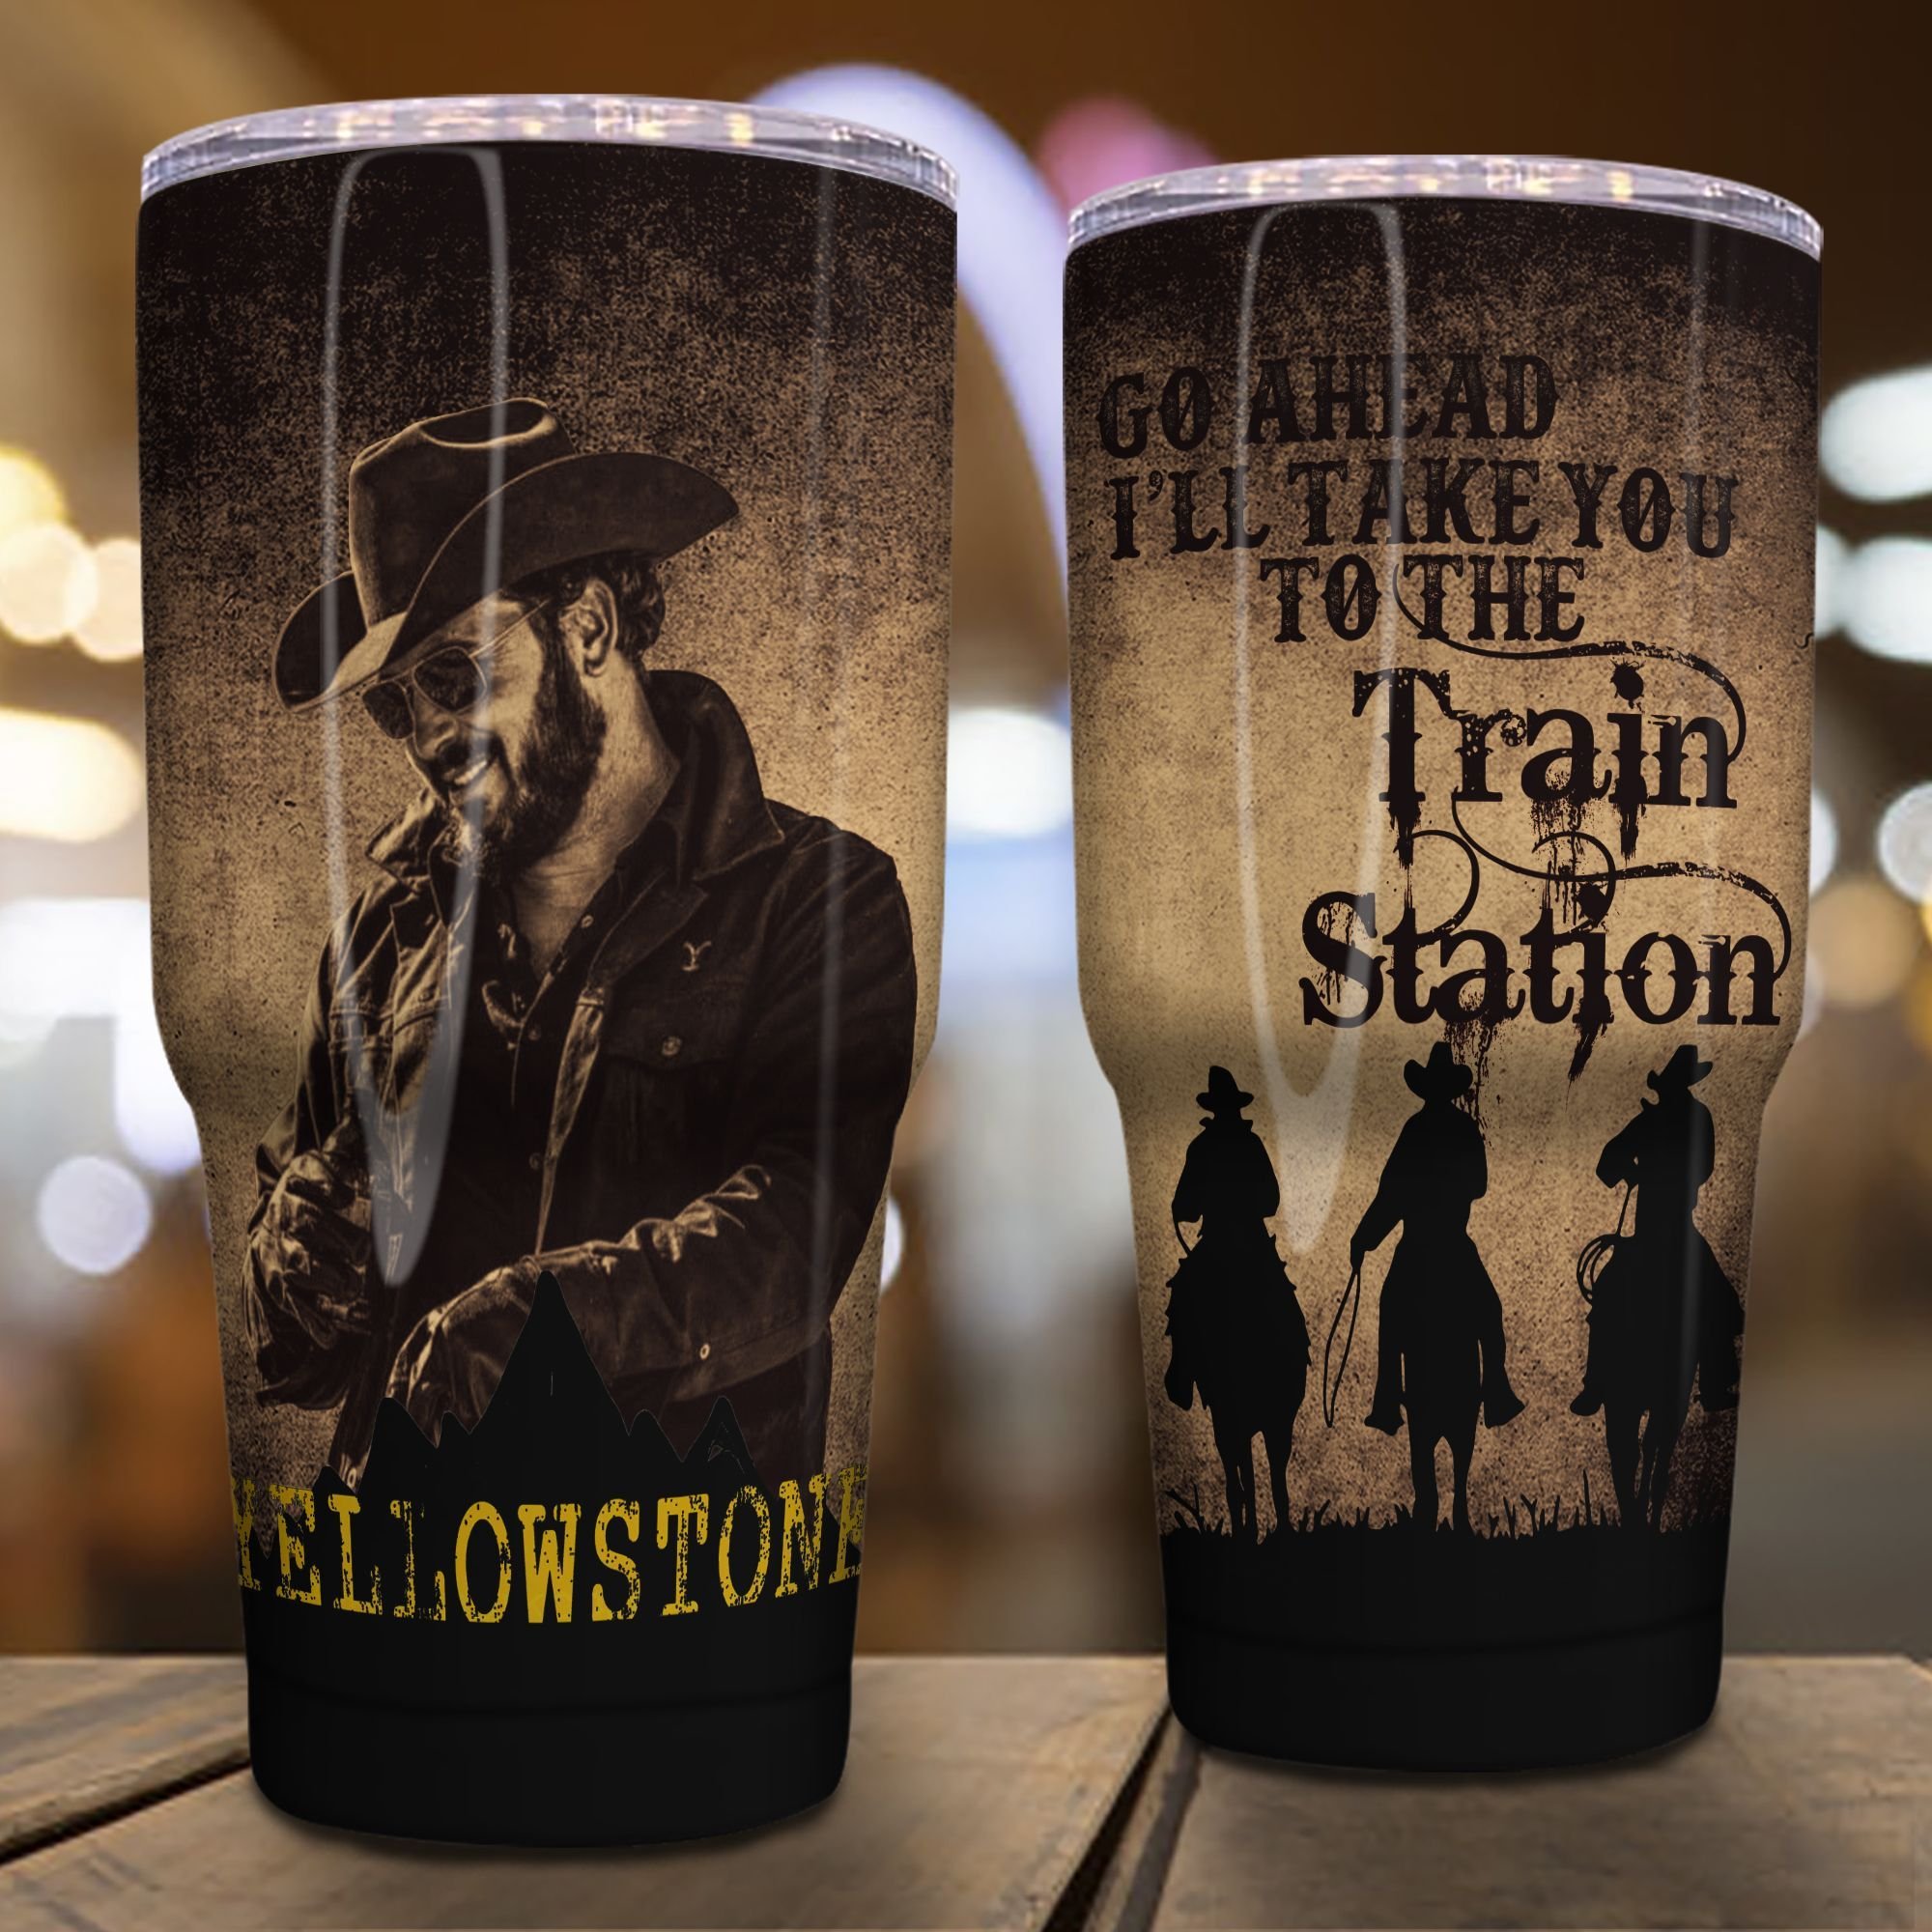 Cowboy_Yellowstone_Go_Ahead_Ill_Take_You_To_The_Train_Station_Tumbler_1